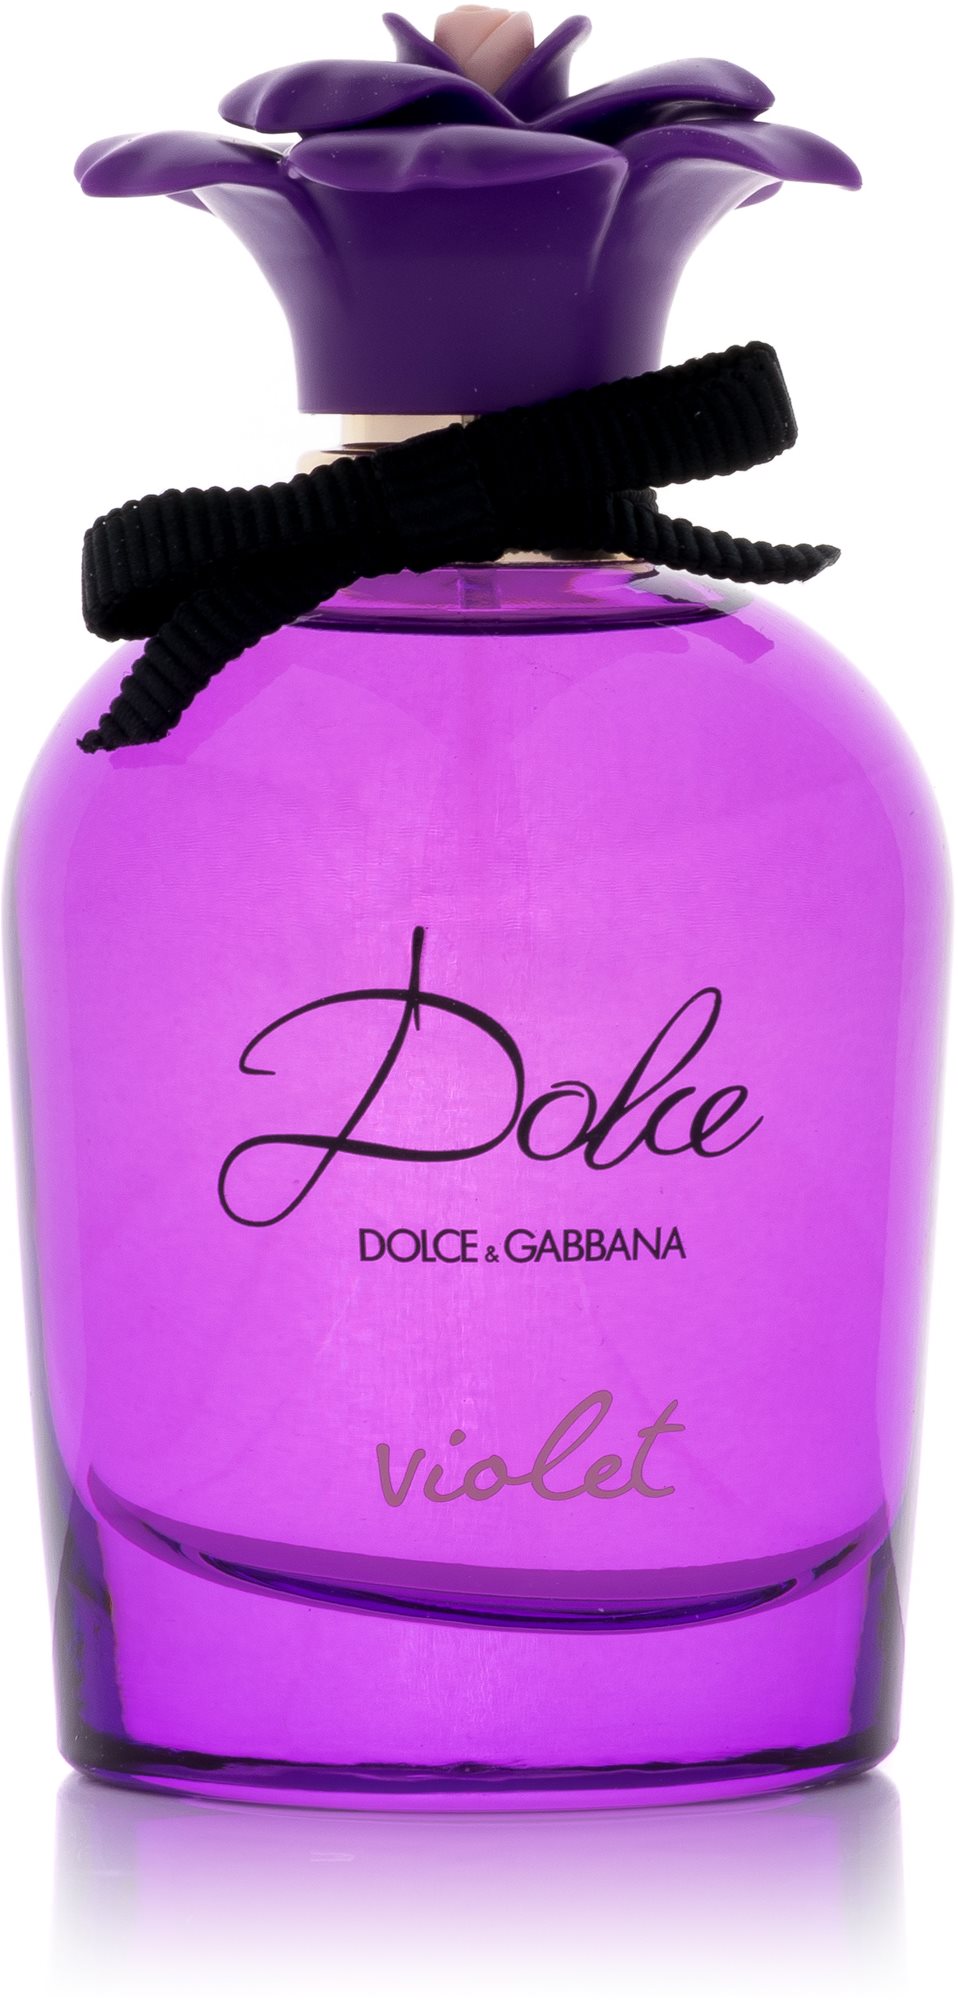 DOLCE & GABBANA Dolce Violet EdT 75 ml